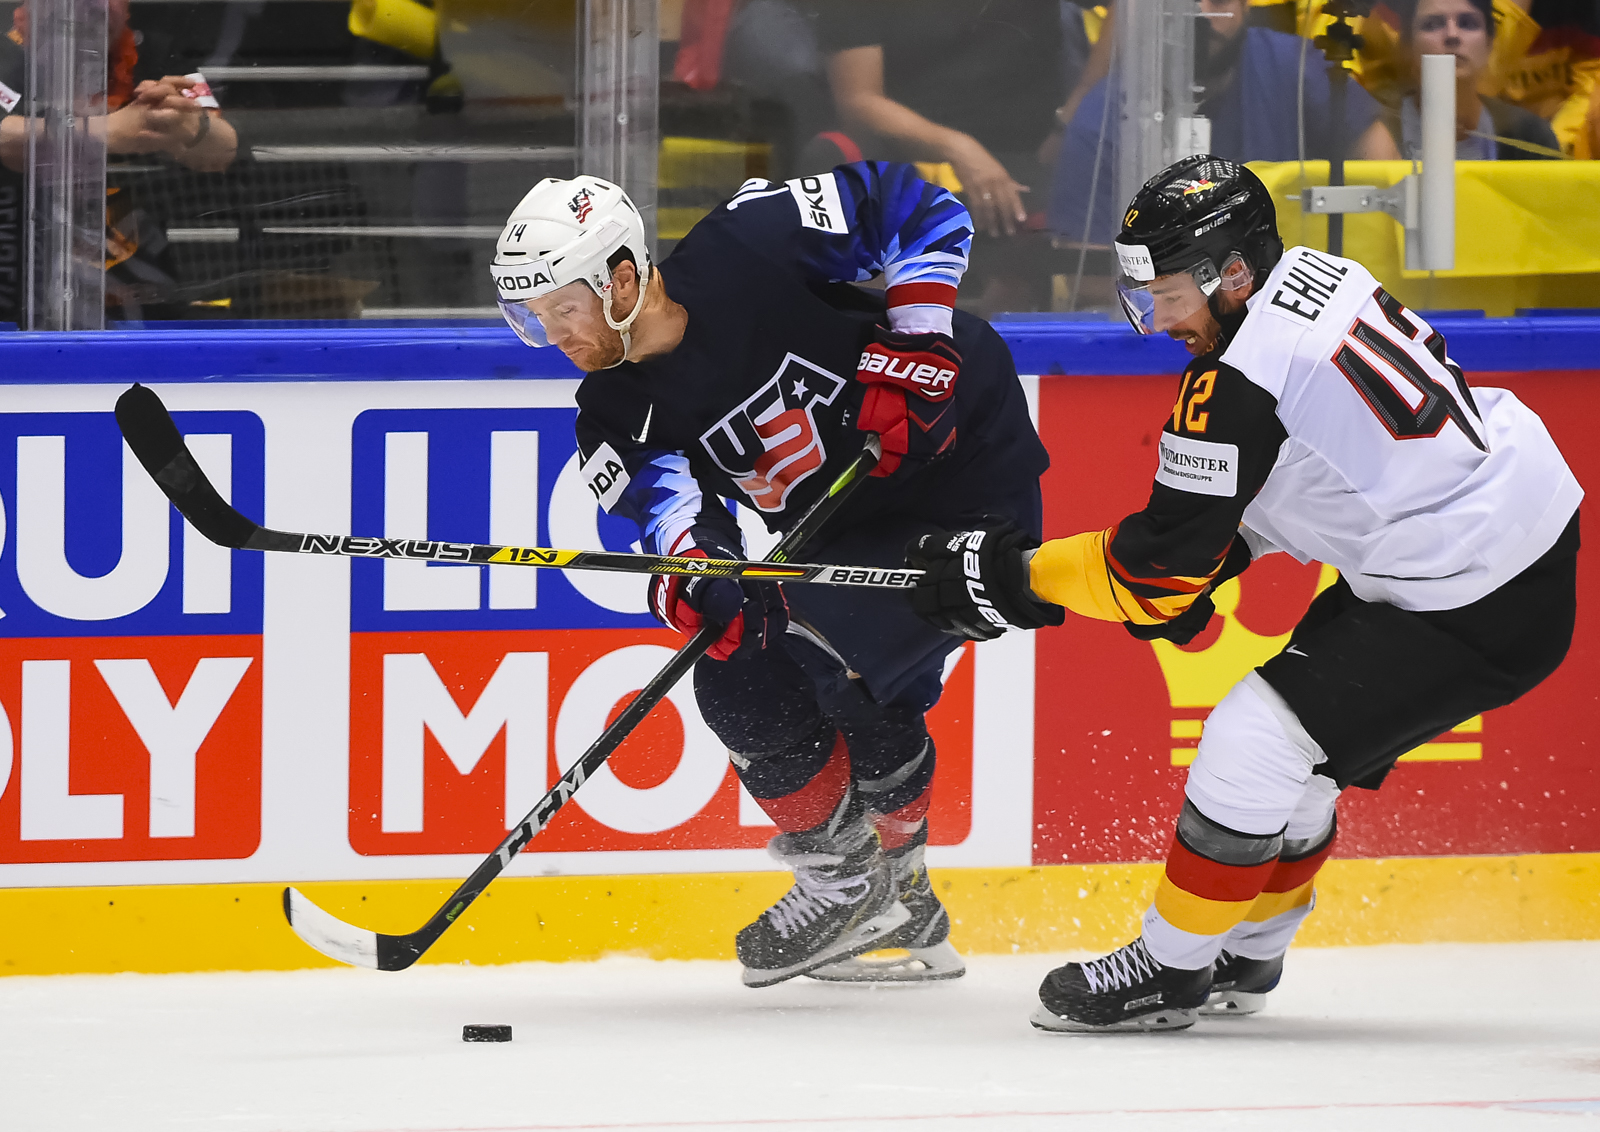 IIHF - Gallery: USA vs. Germany